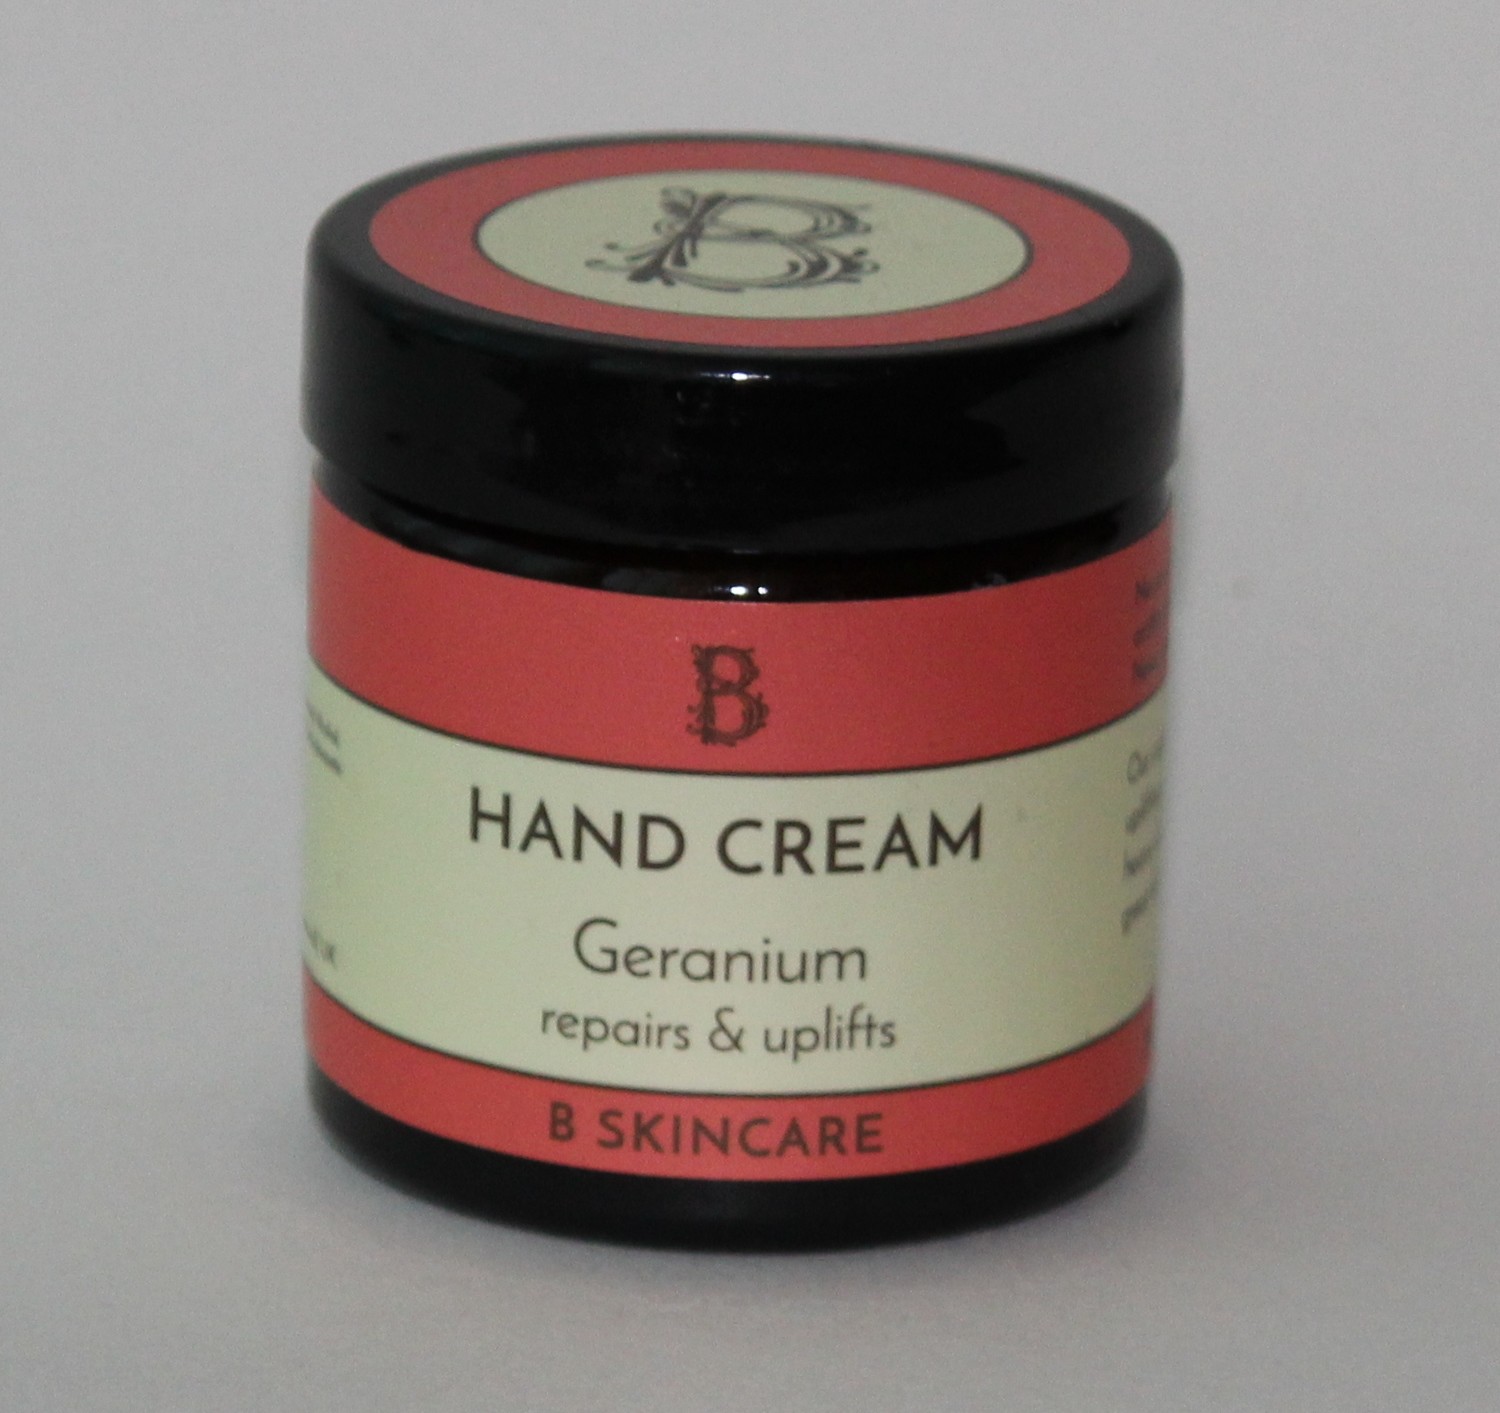 B Skincare Geranium hand and foot cream